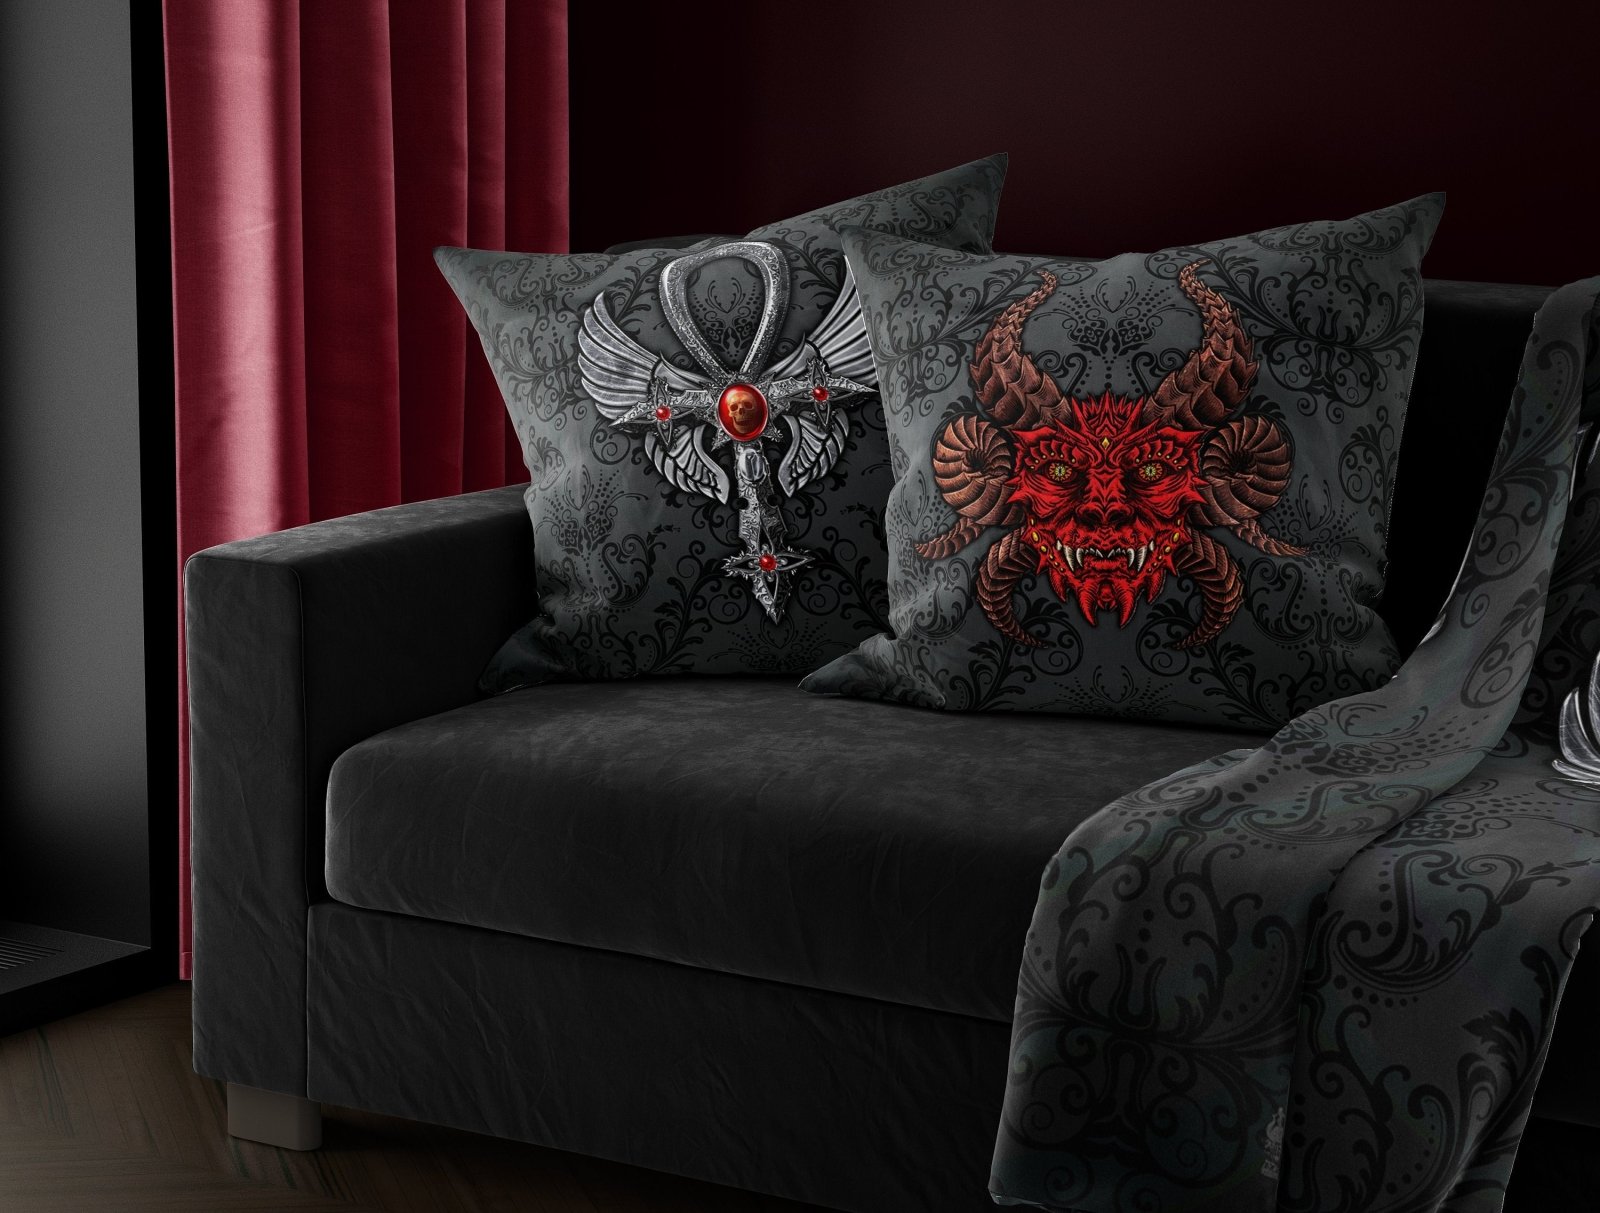 Gothic Throw Pillow, Decorative Accent Cushion, Nu Goth Room Decor, Dark Art, Alternative Home - Ankh Cross, Black - Abysm Internal